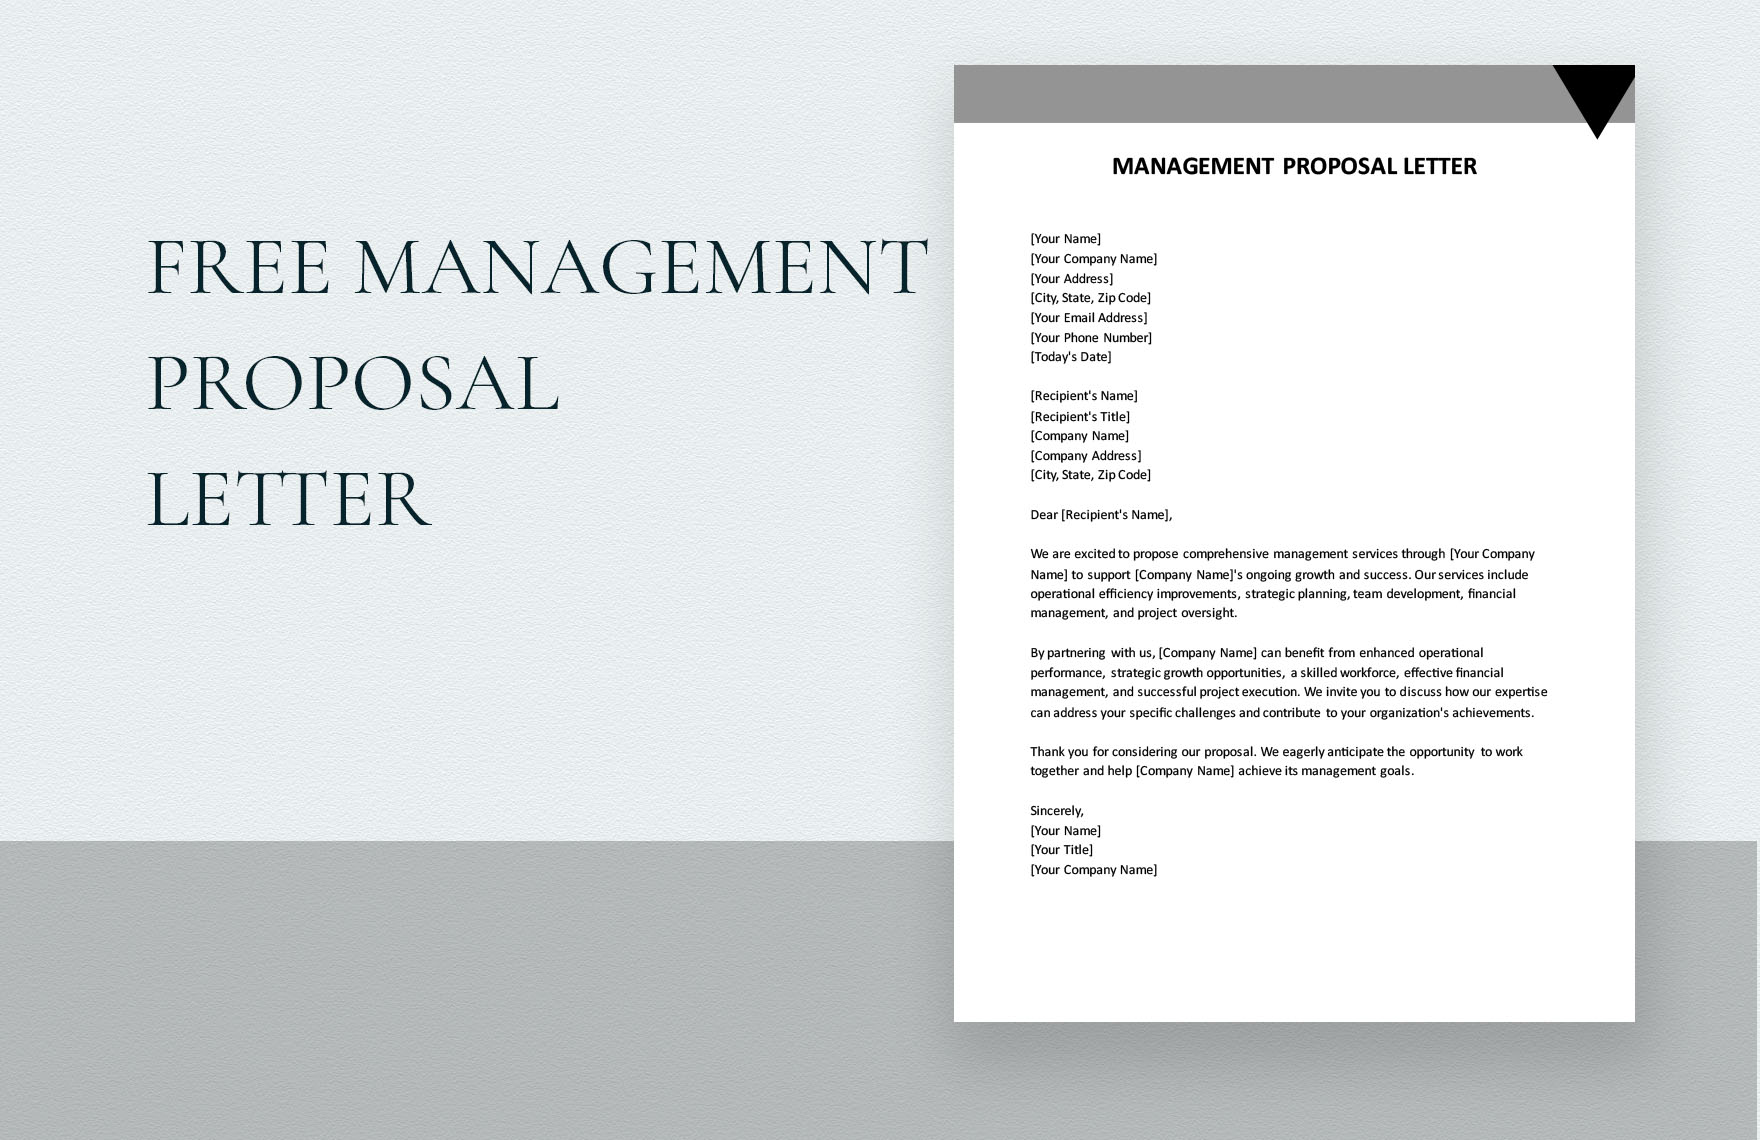 Management Proposal Letter